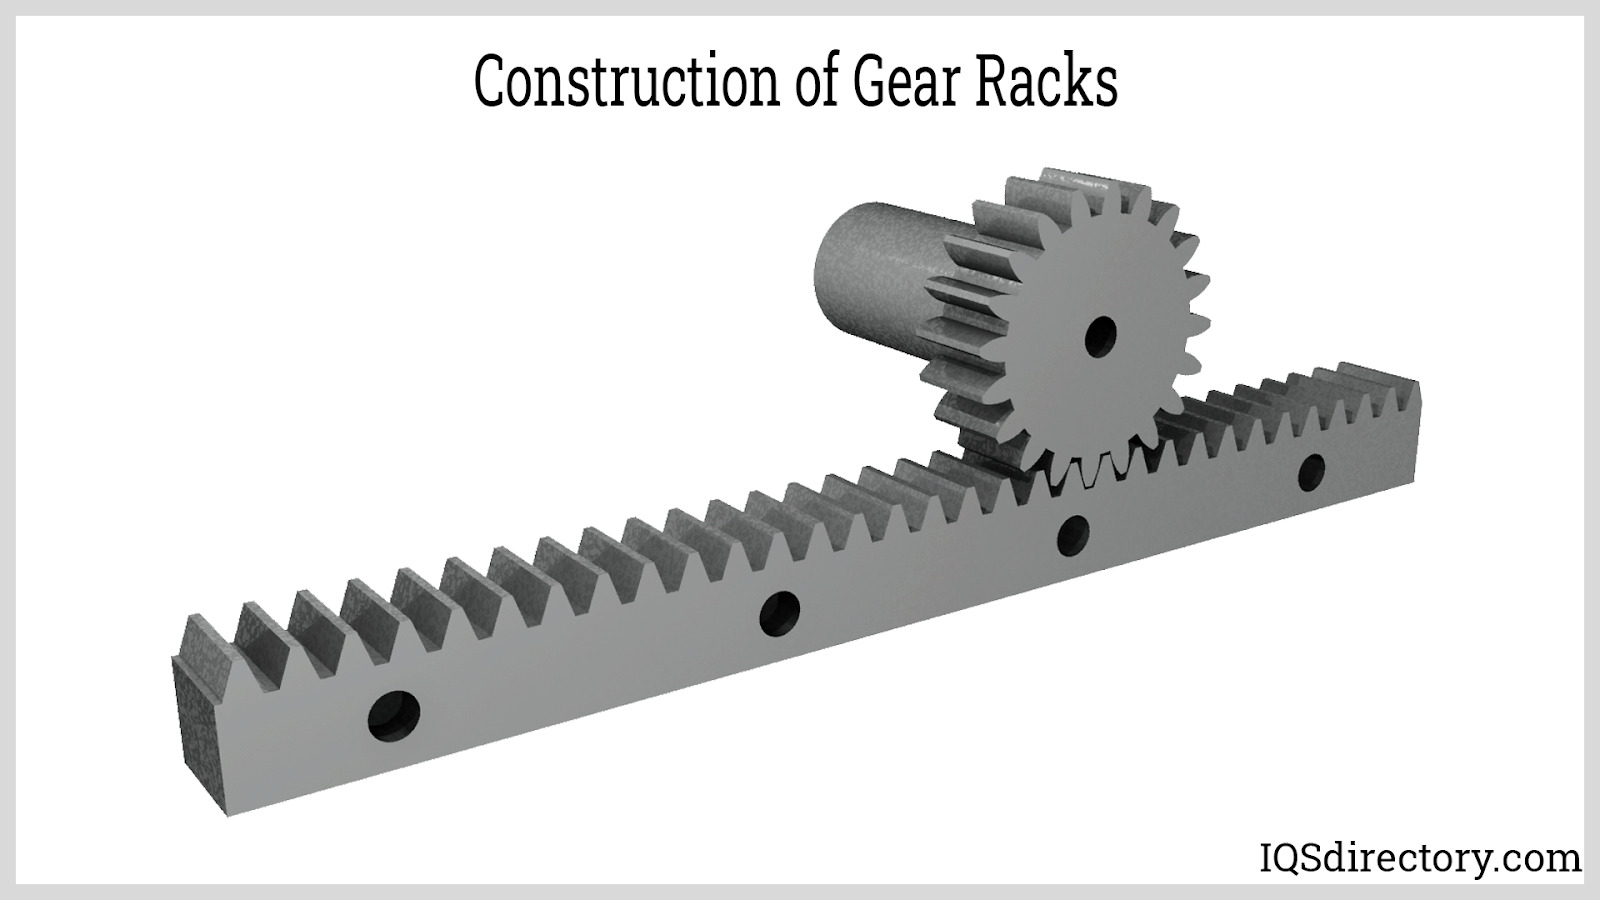 Construction of Gear Racks